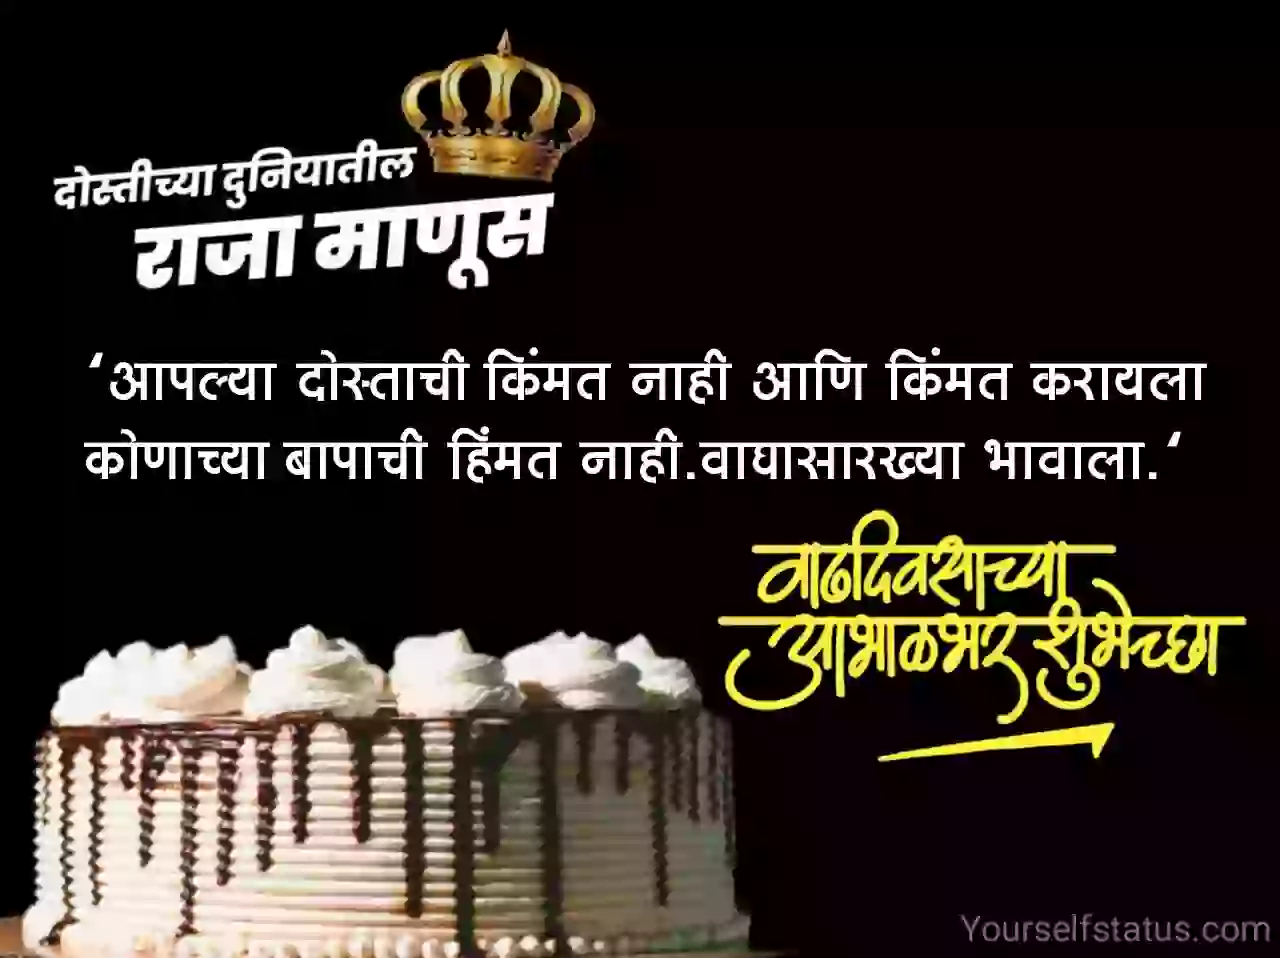 Happy birthday wishes for friends in marathi